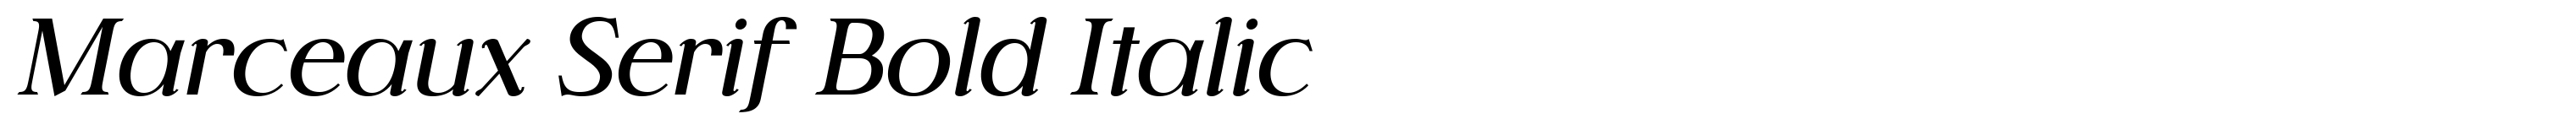 Marceaux Serif Bold Italic